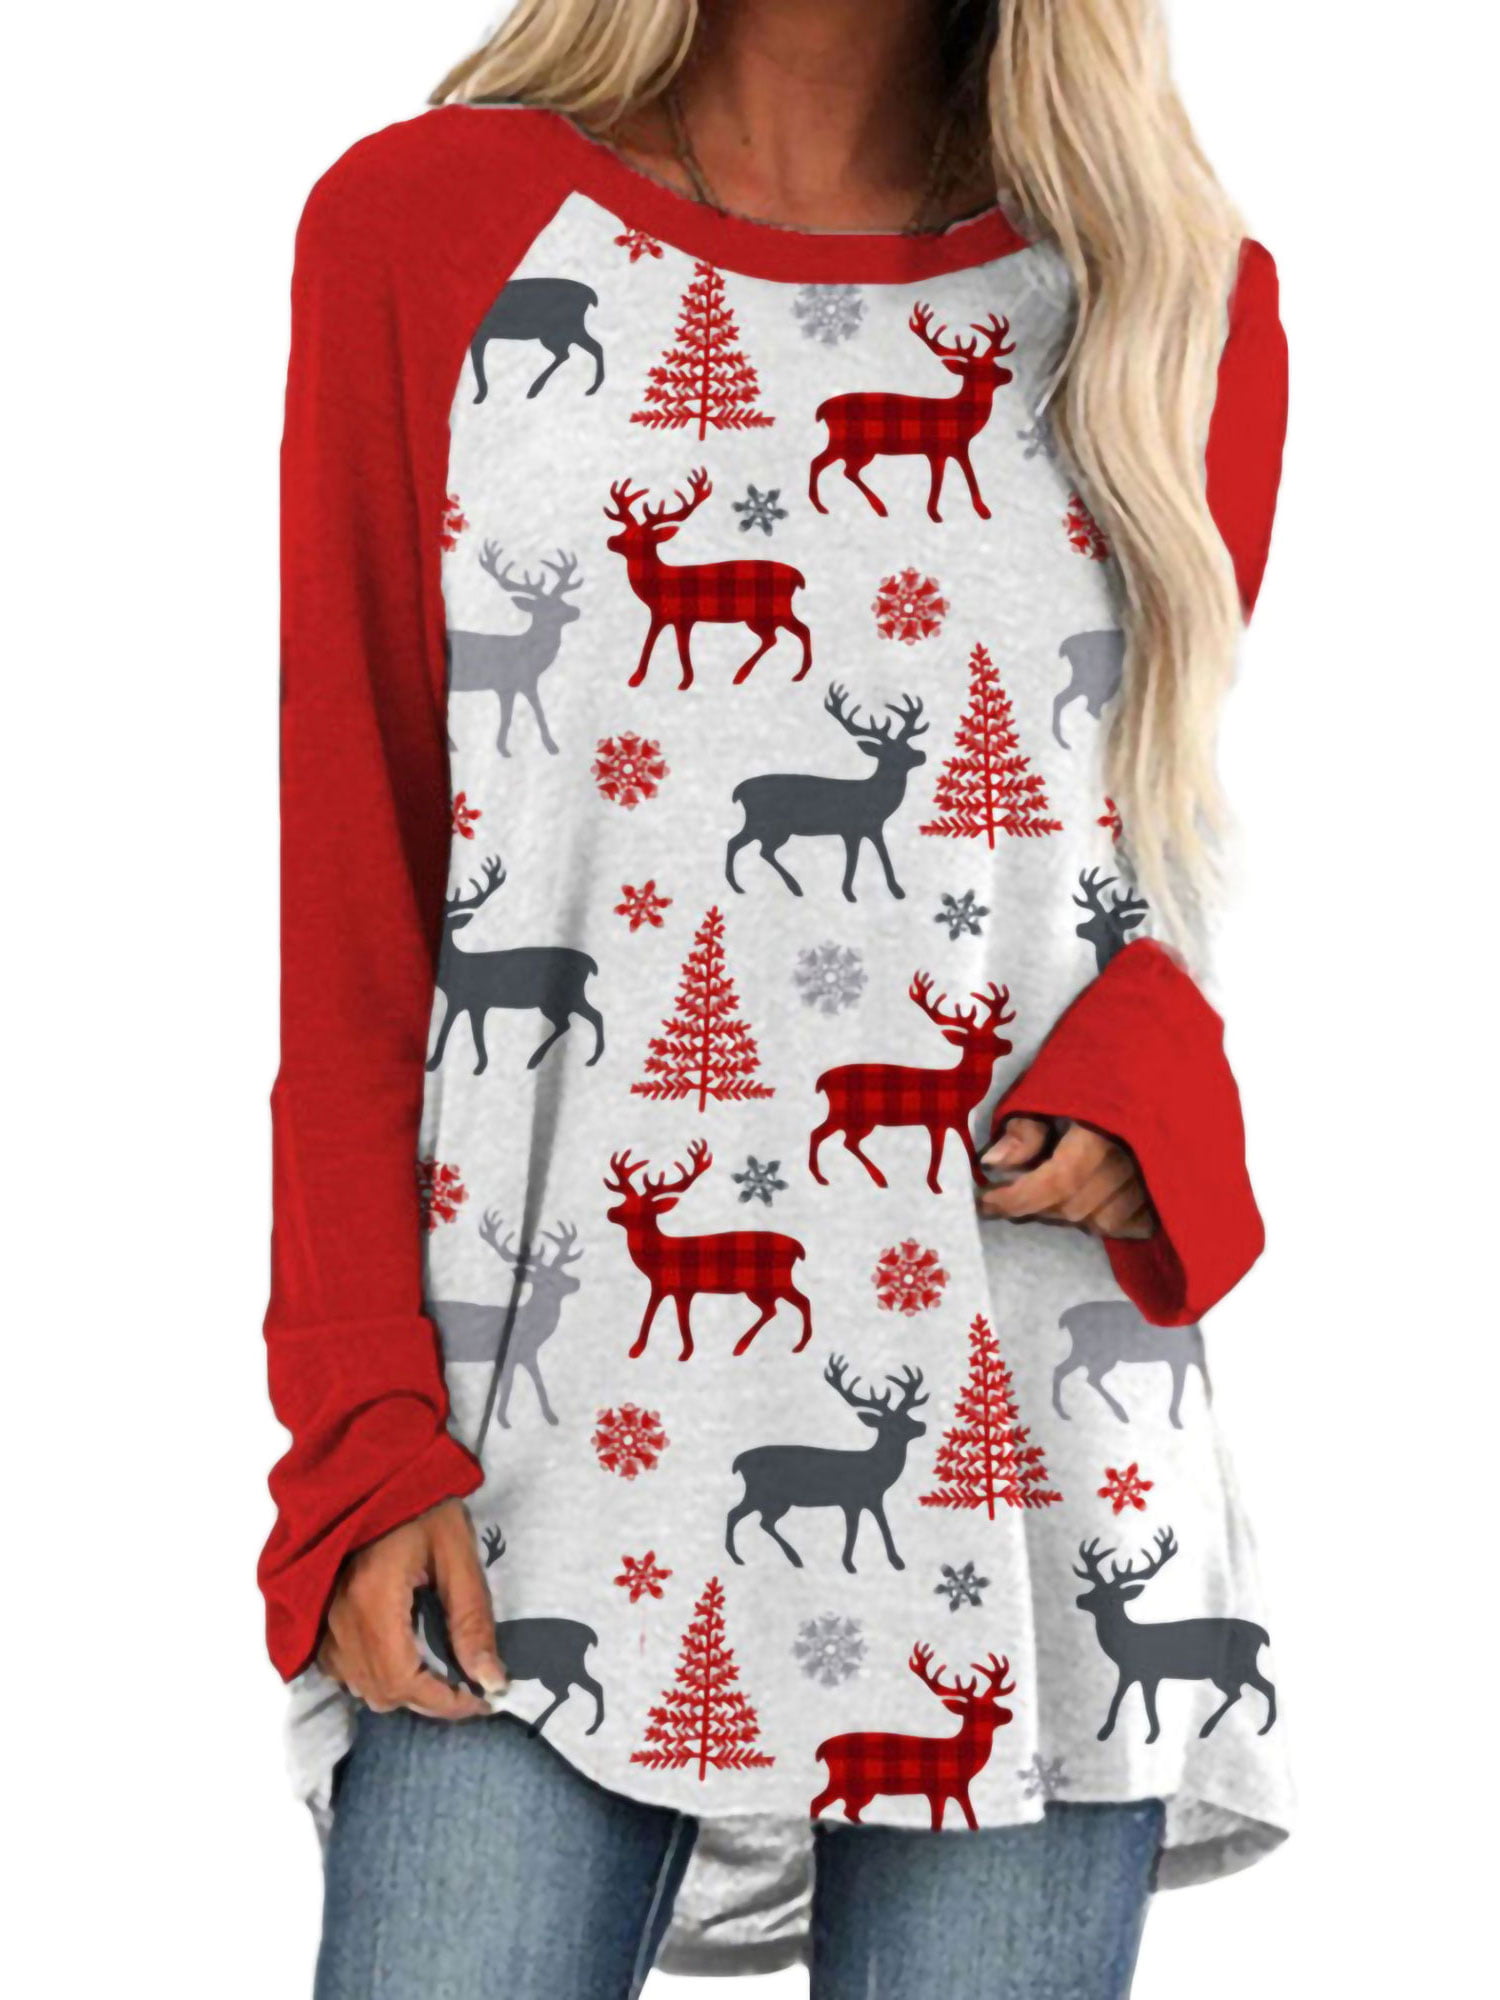 Merry Christmas Black Ugly Christmas Tunic Tops for Women Long Sleeve Funny Cute Cartoon Elk Print Casual Tshirt Blouses